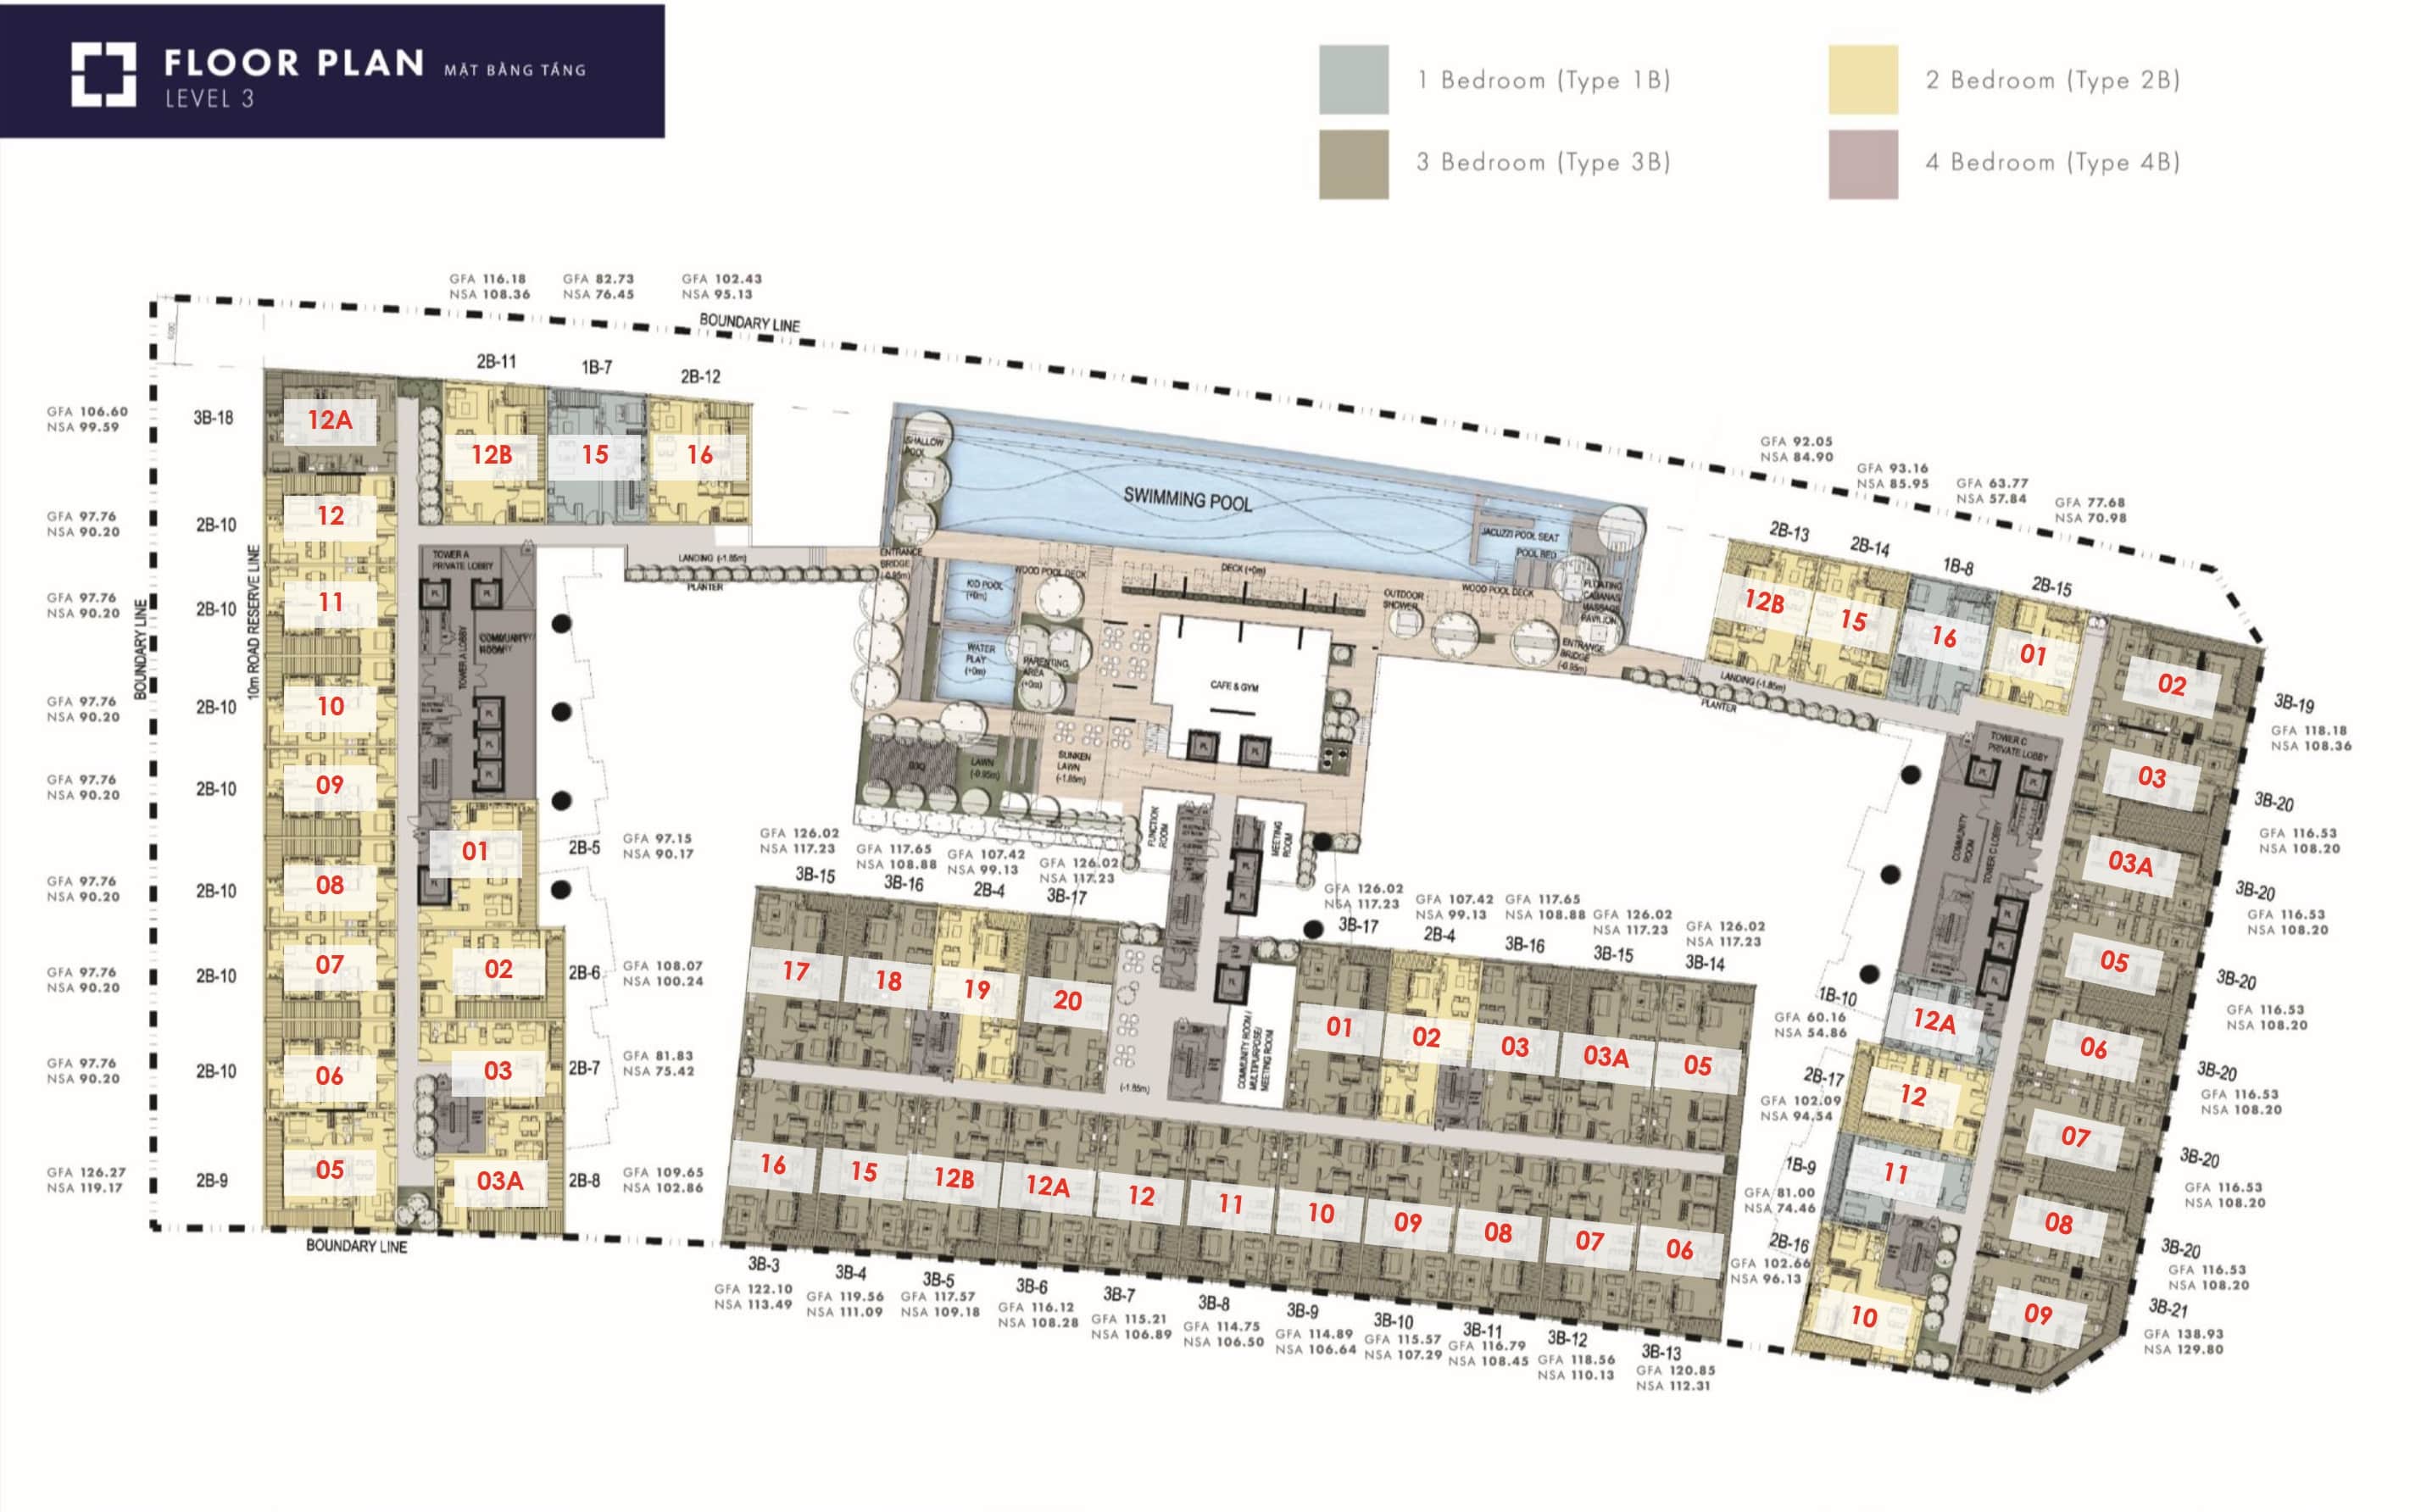 Floor plan of Metropole Thu Thiem apartment